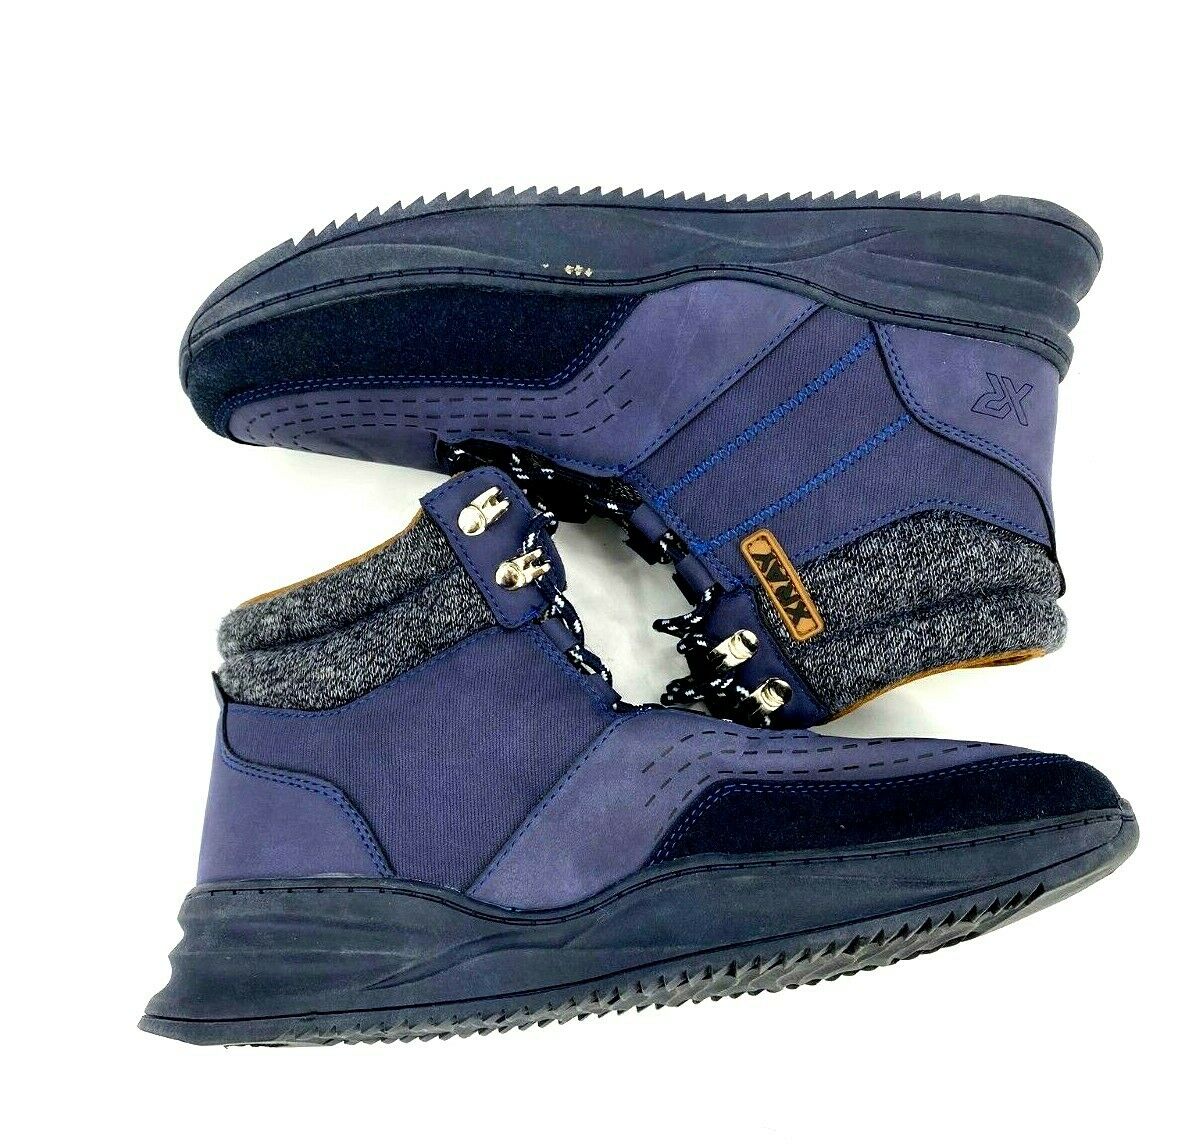 Xray Luke Navy Blue Lace Up Mens Hiking Boots Size US 9 EU 42 New